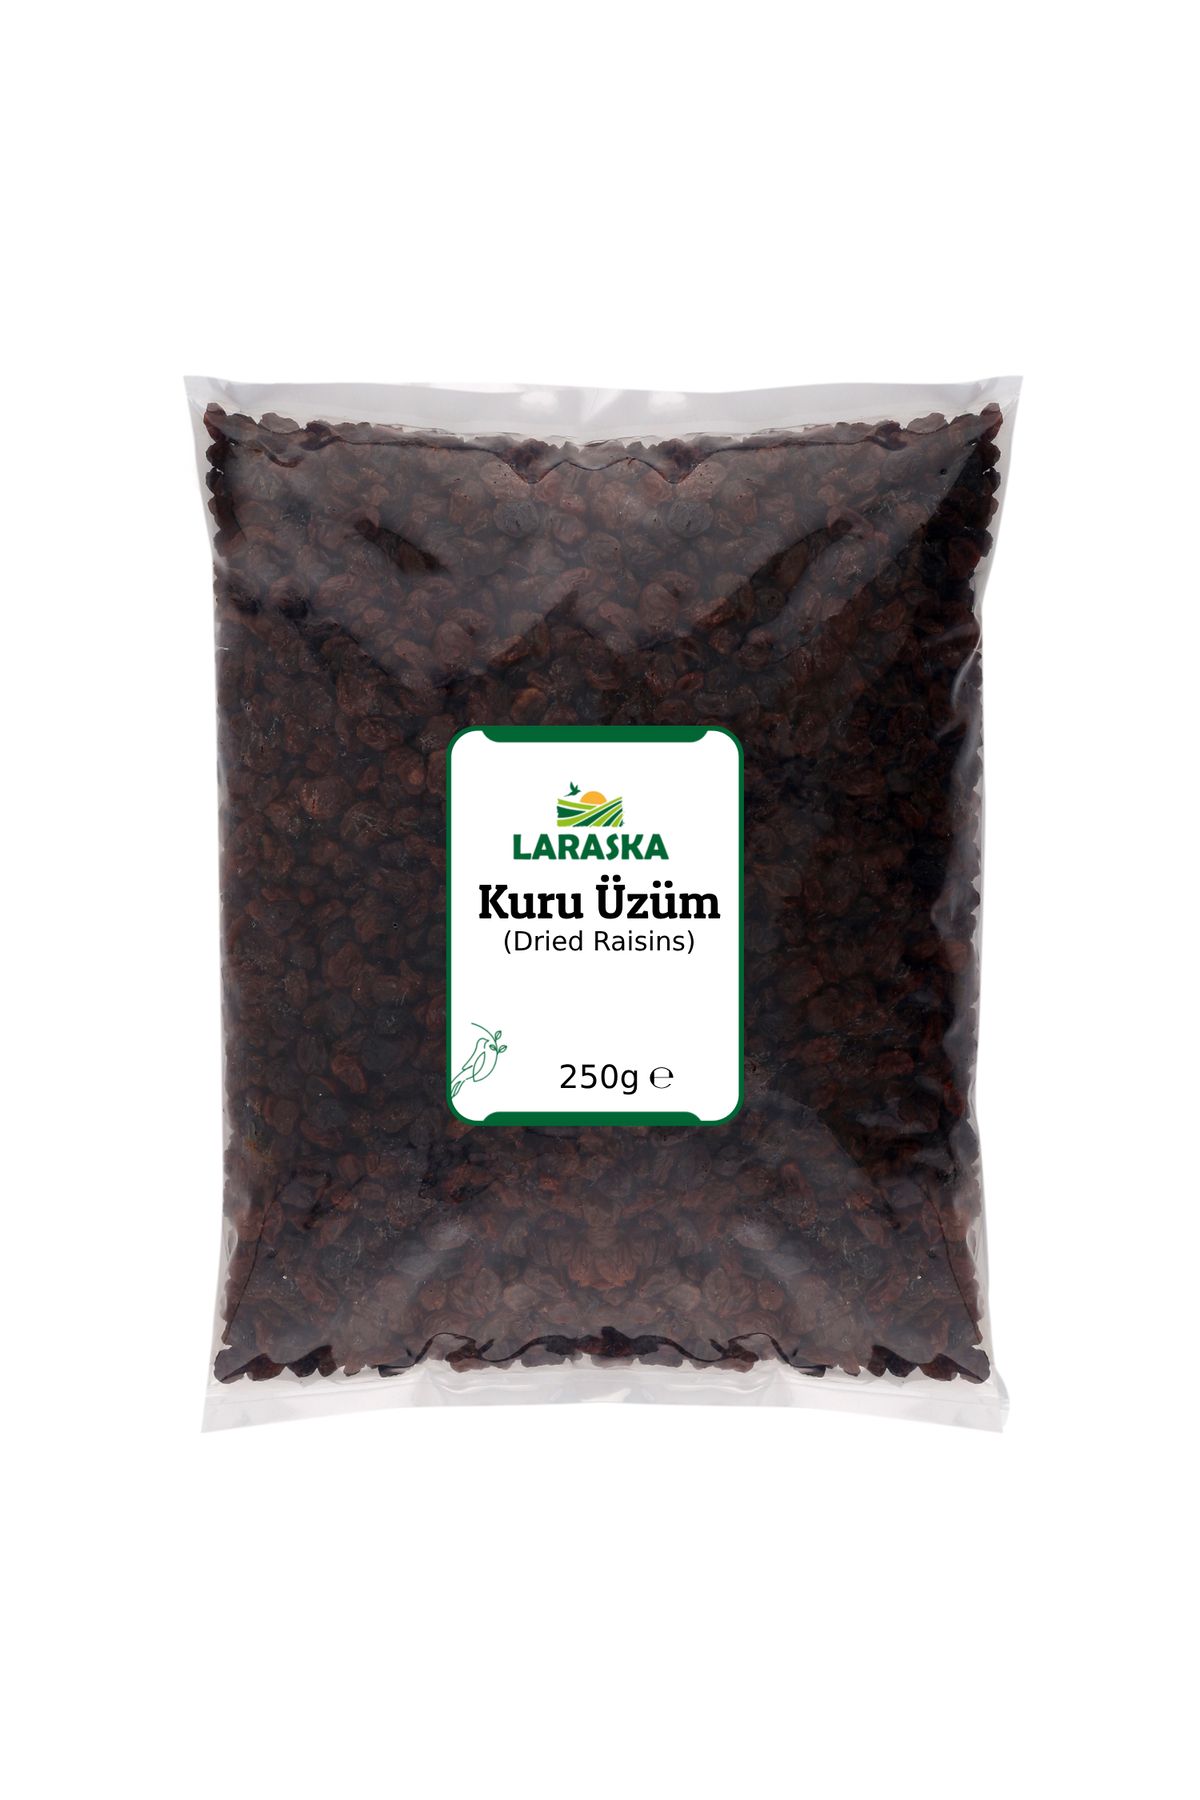 Laraska Kuru Üzüm 250g - Dried Raisins 250g